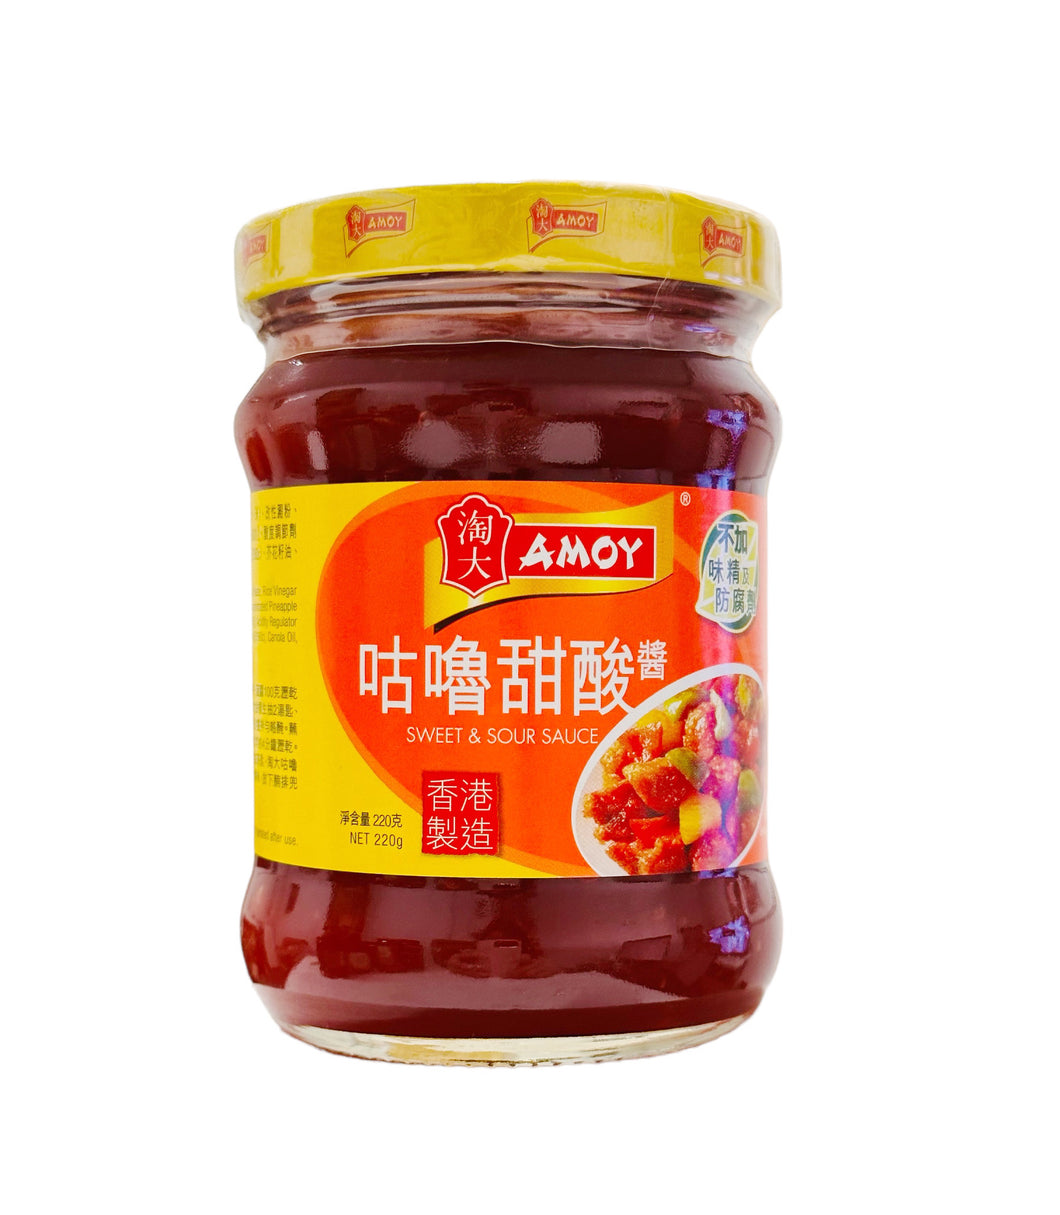 AMOY Sweet & Sour Sauce 240g 淘大咕噜甜酸酱